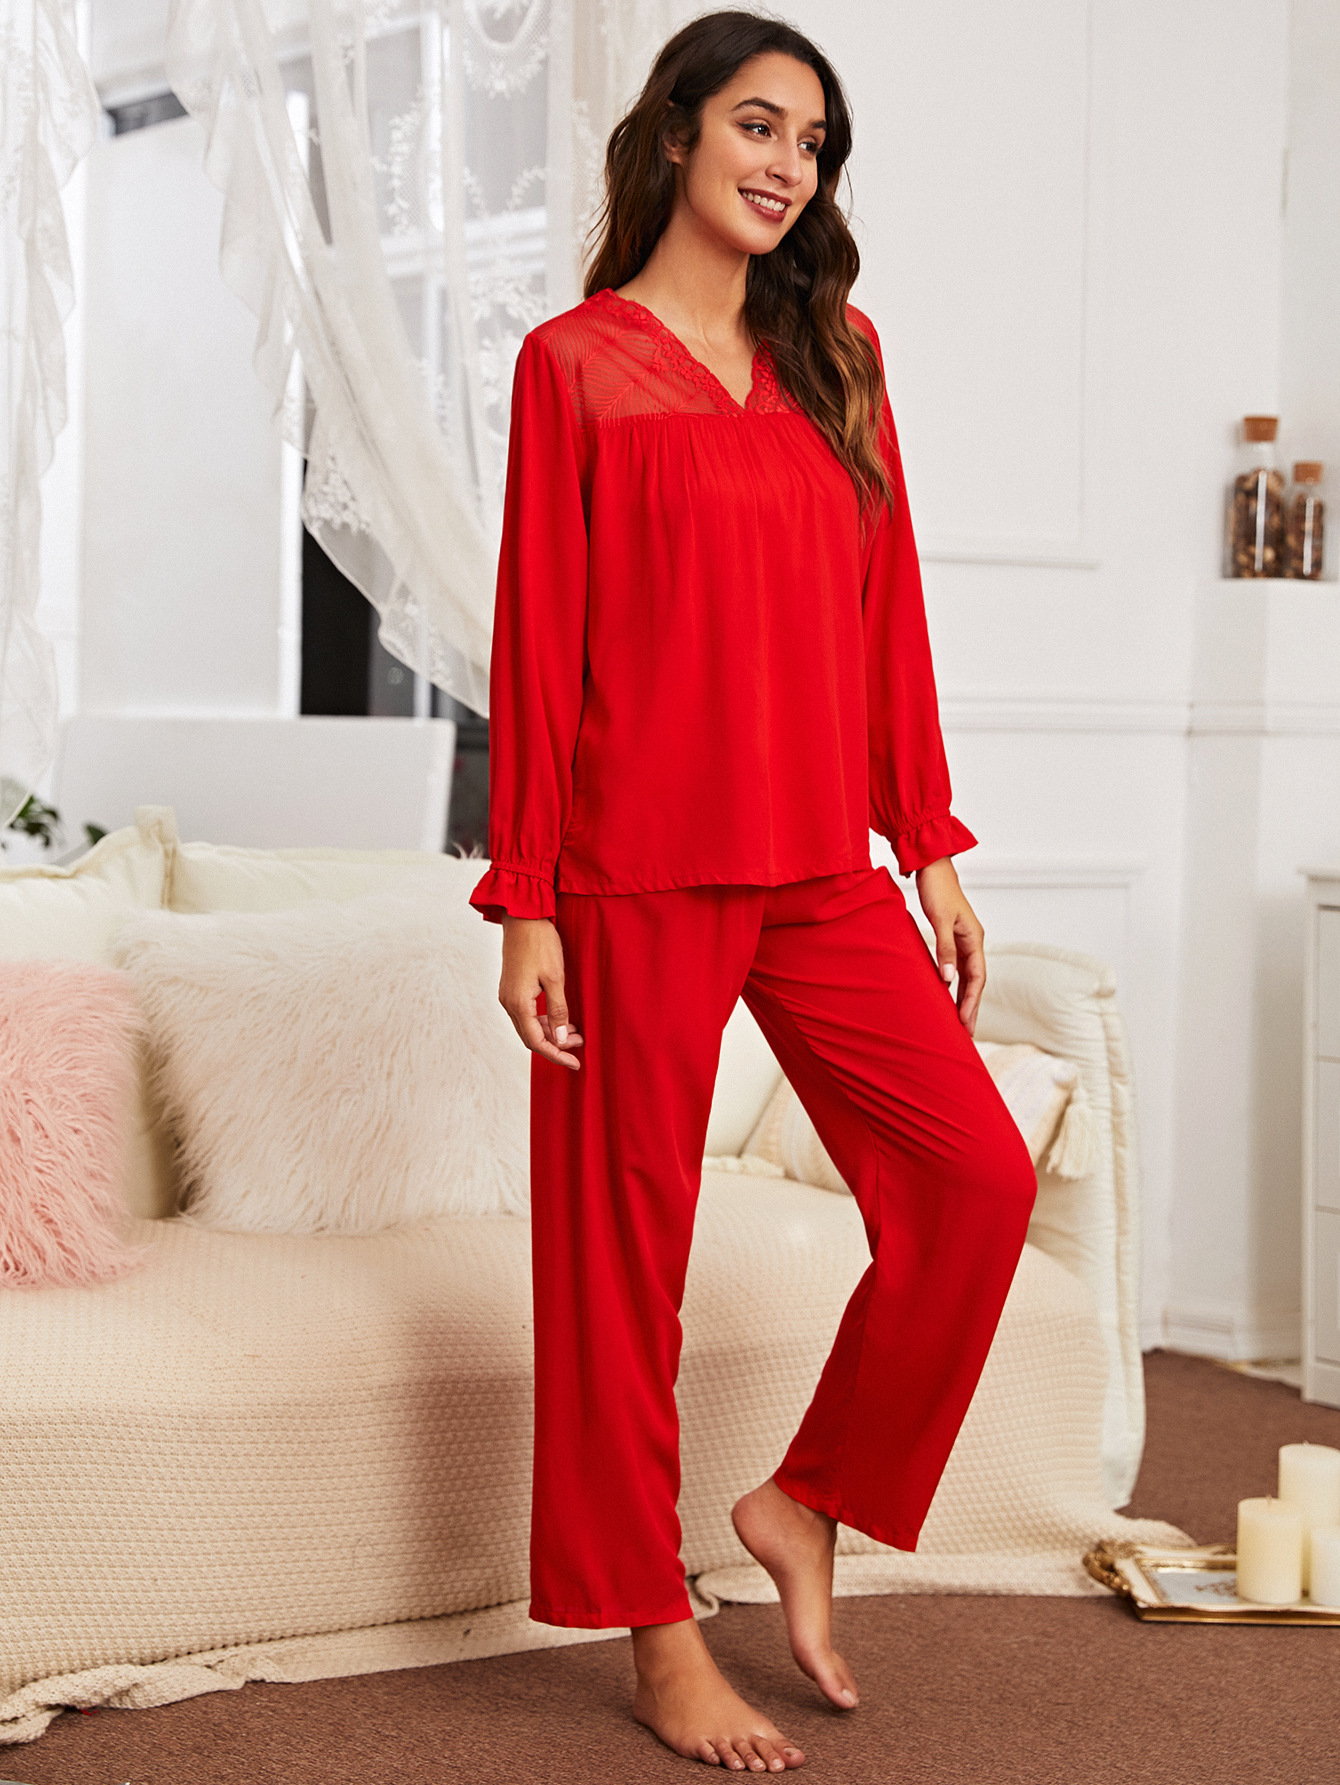 Women Sleepwear Set V Neck Top Pants Modal Pajamas Nightwear, Red, XL